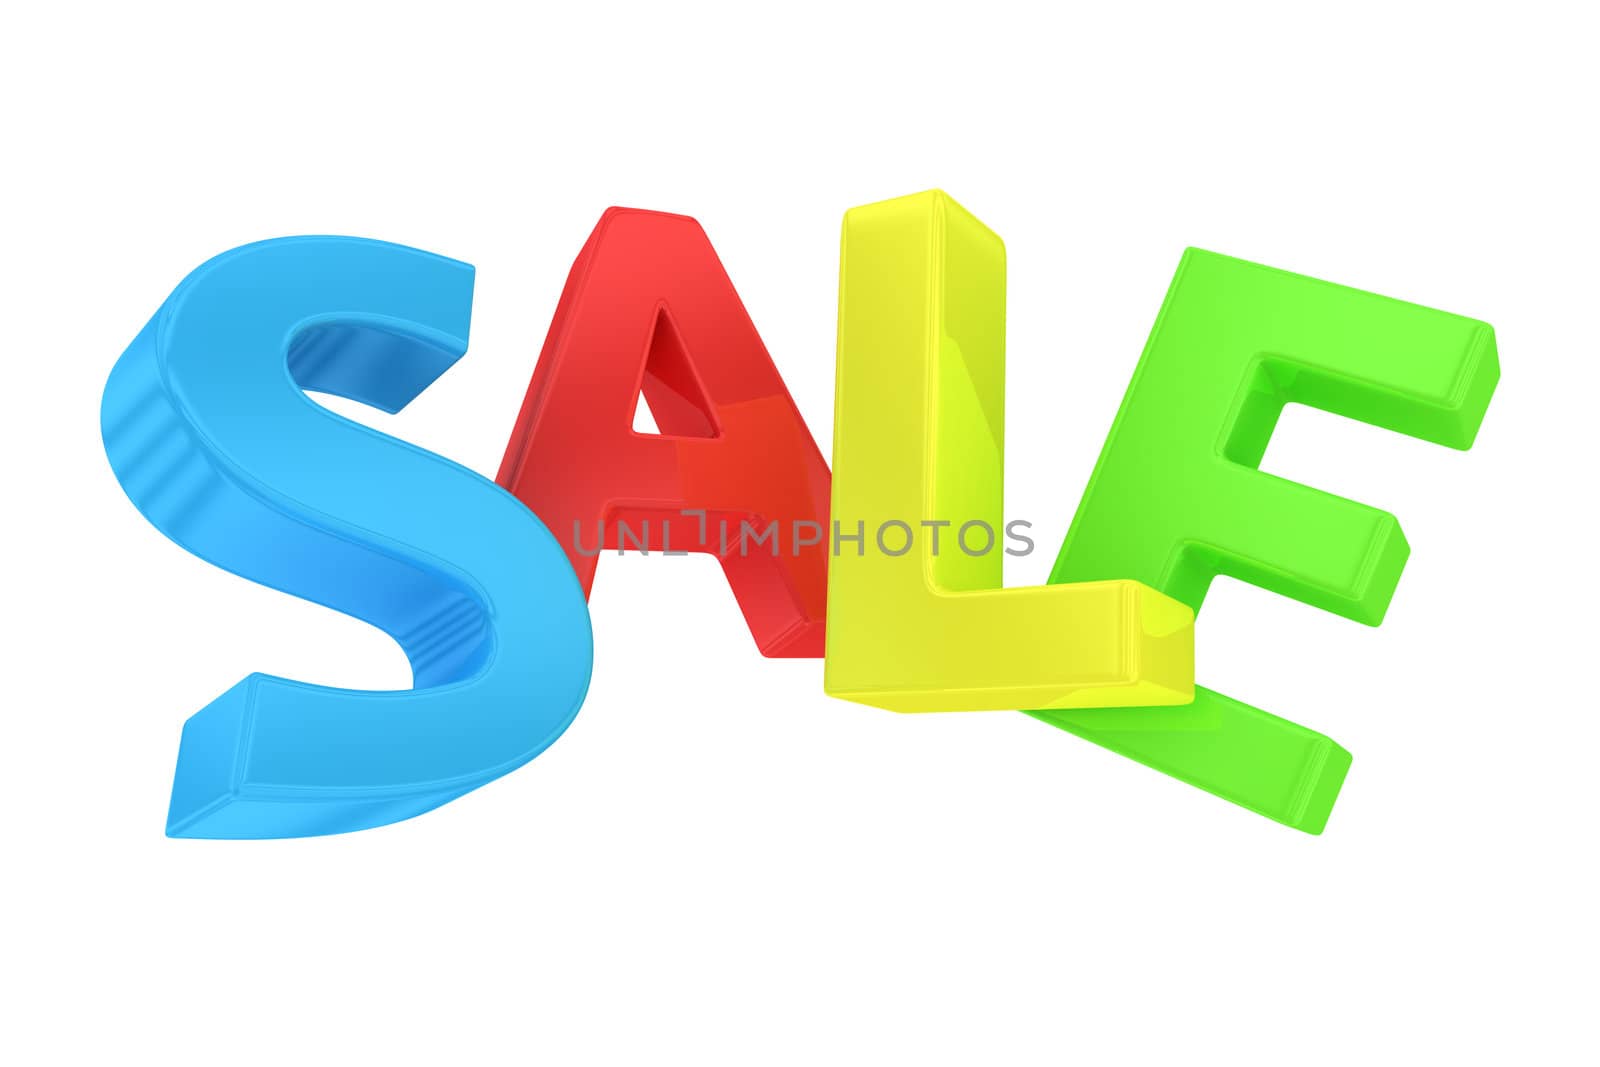 Word "Sale" written by multicolored letters